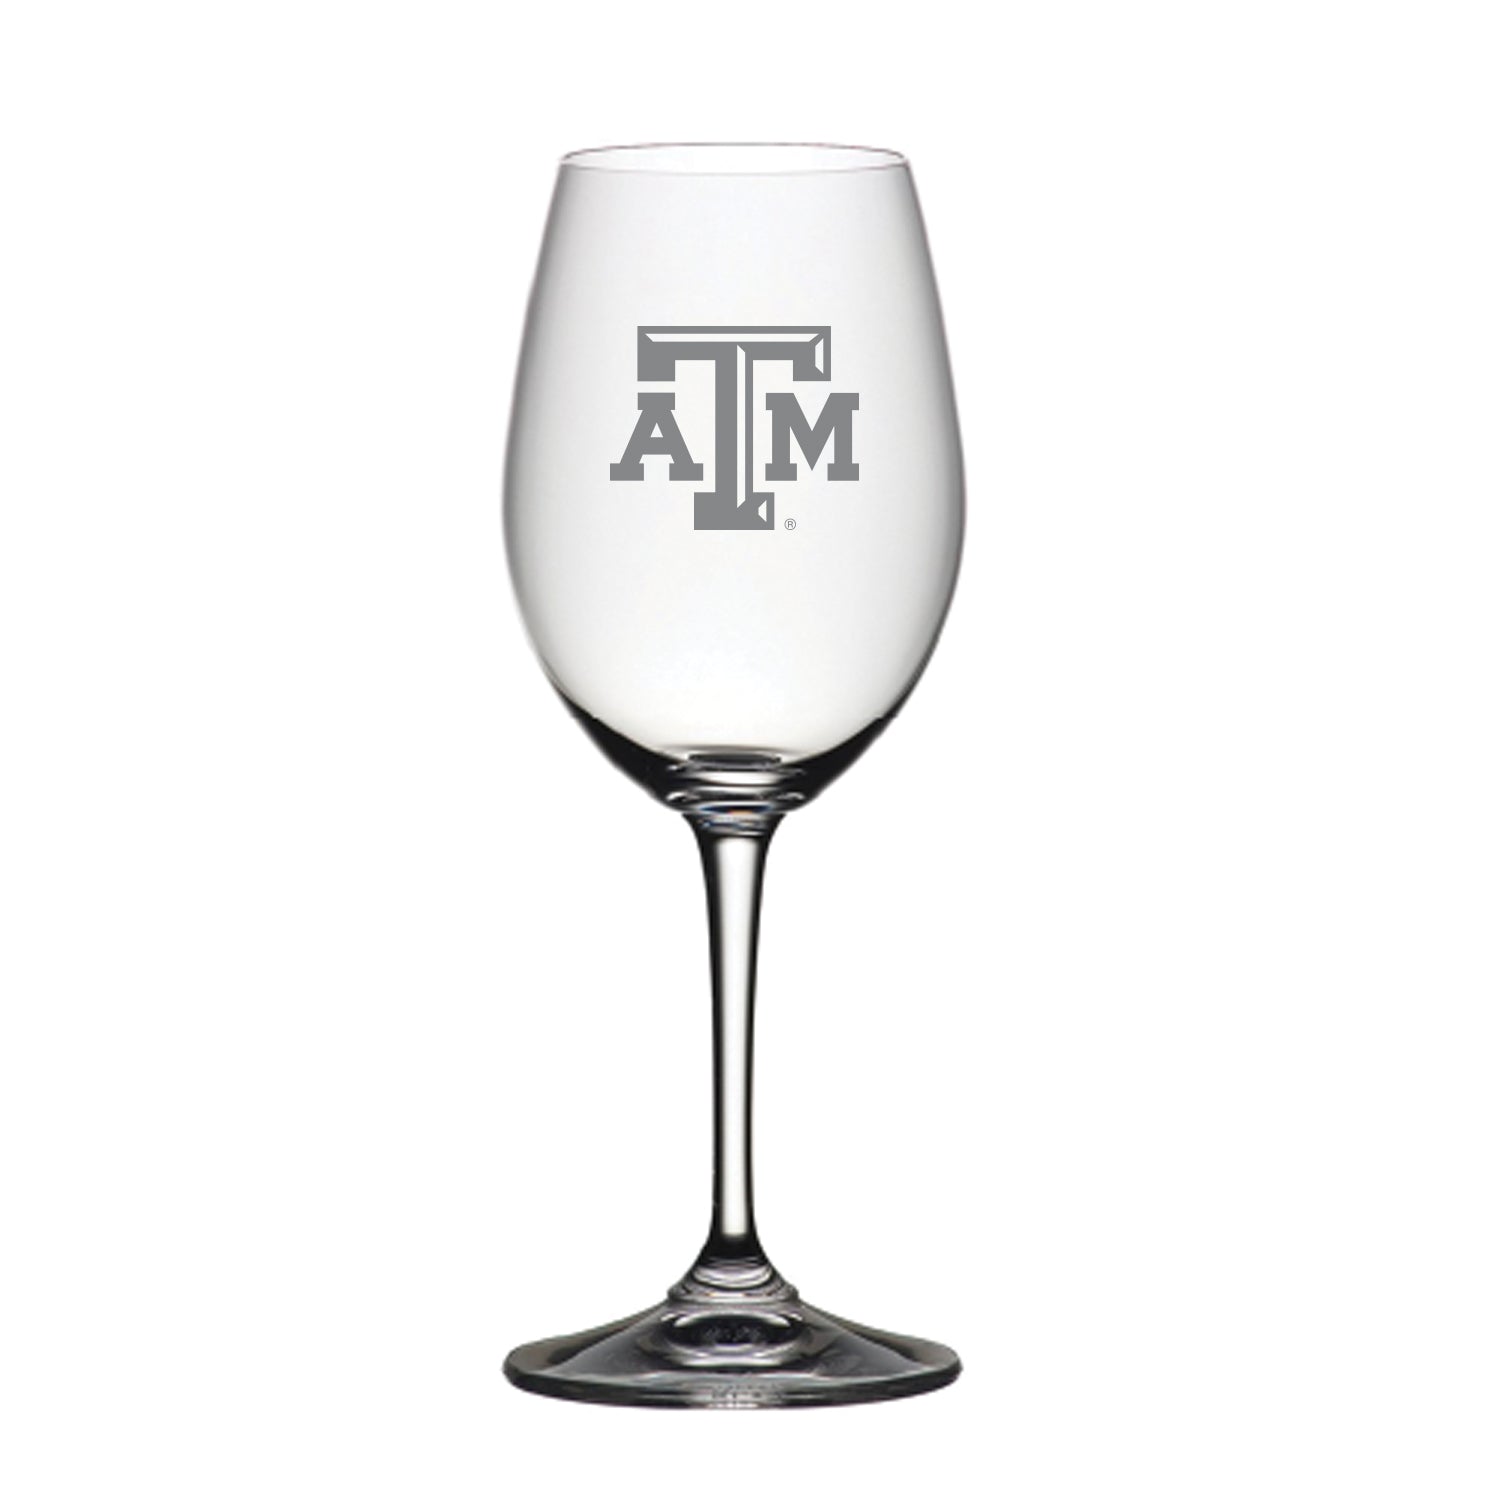 DROPSHIP ITEM: Texas A&M Set of 2 Riedel Wine Glasses